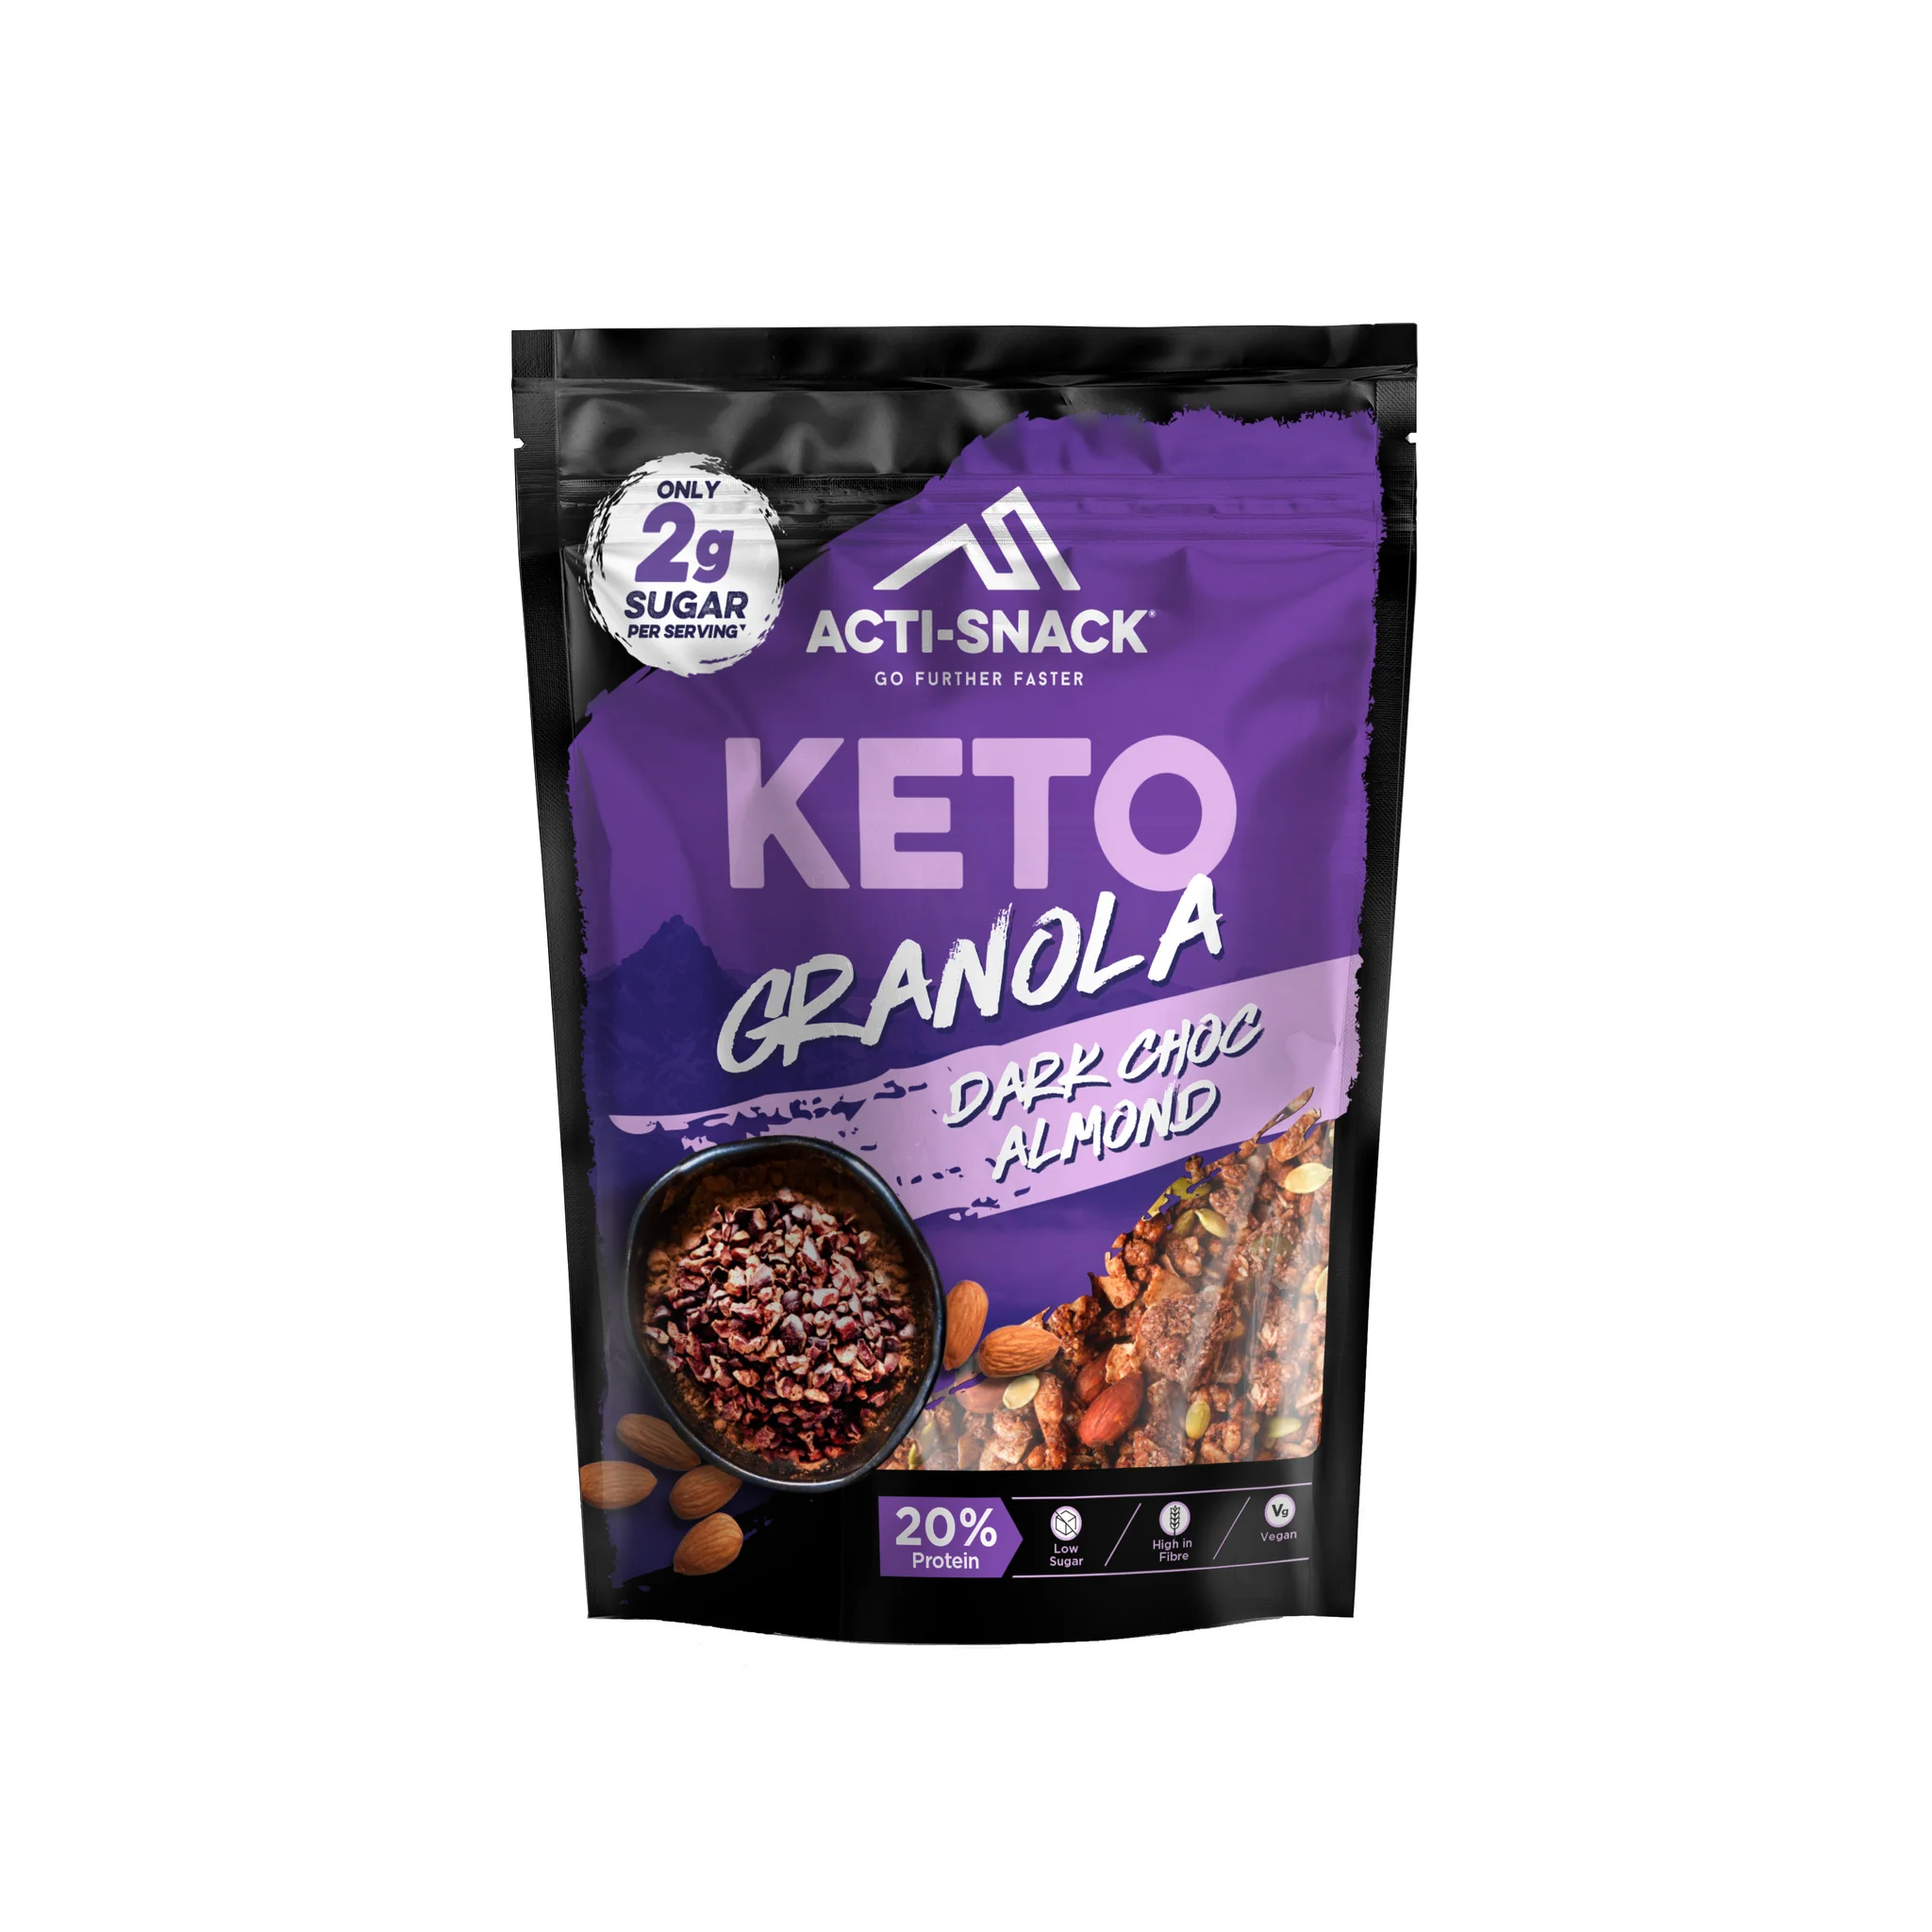 Acti-Snack KETO DARK CHOC ALMOND GRANOLA - Review